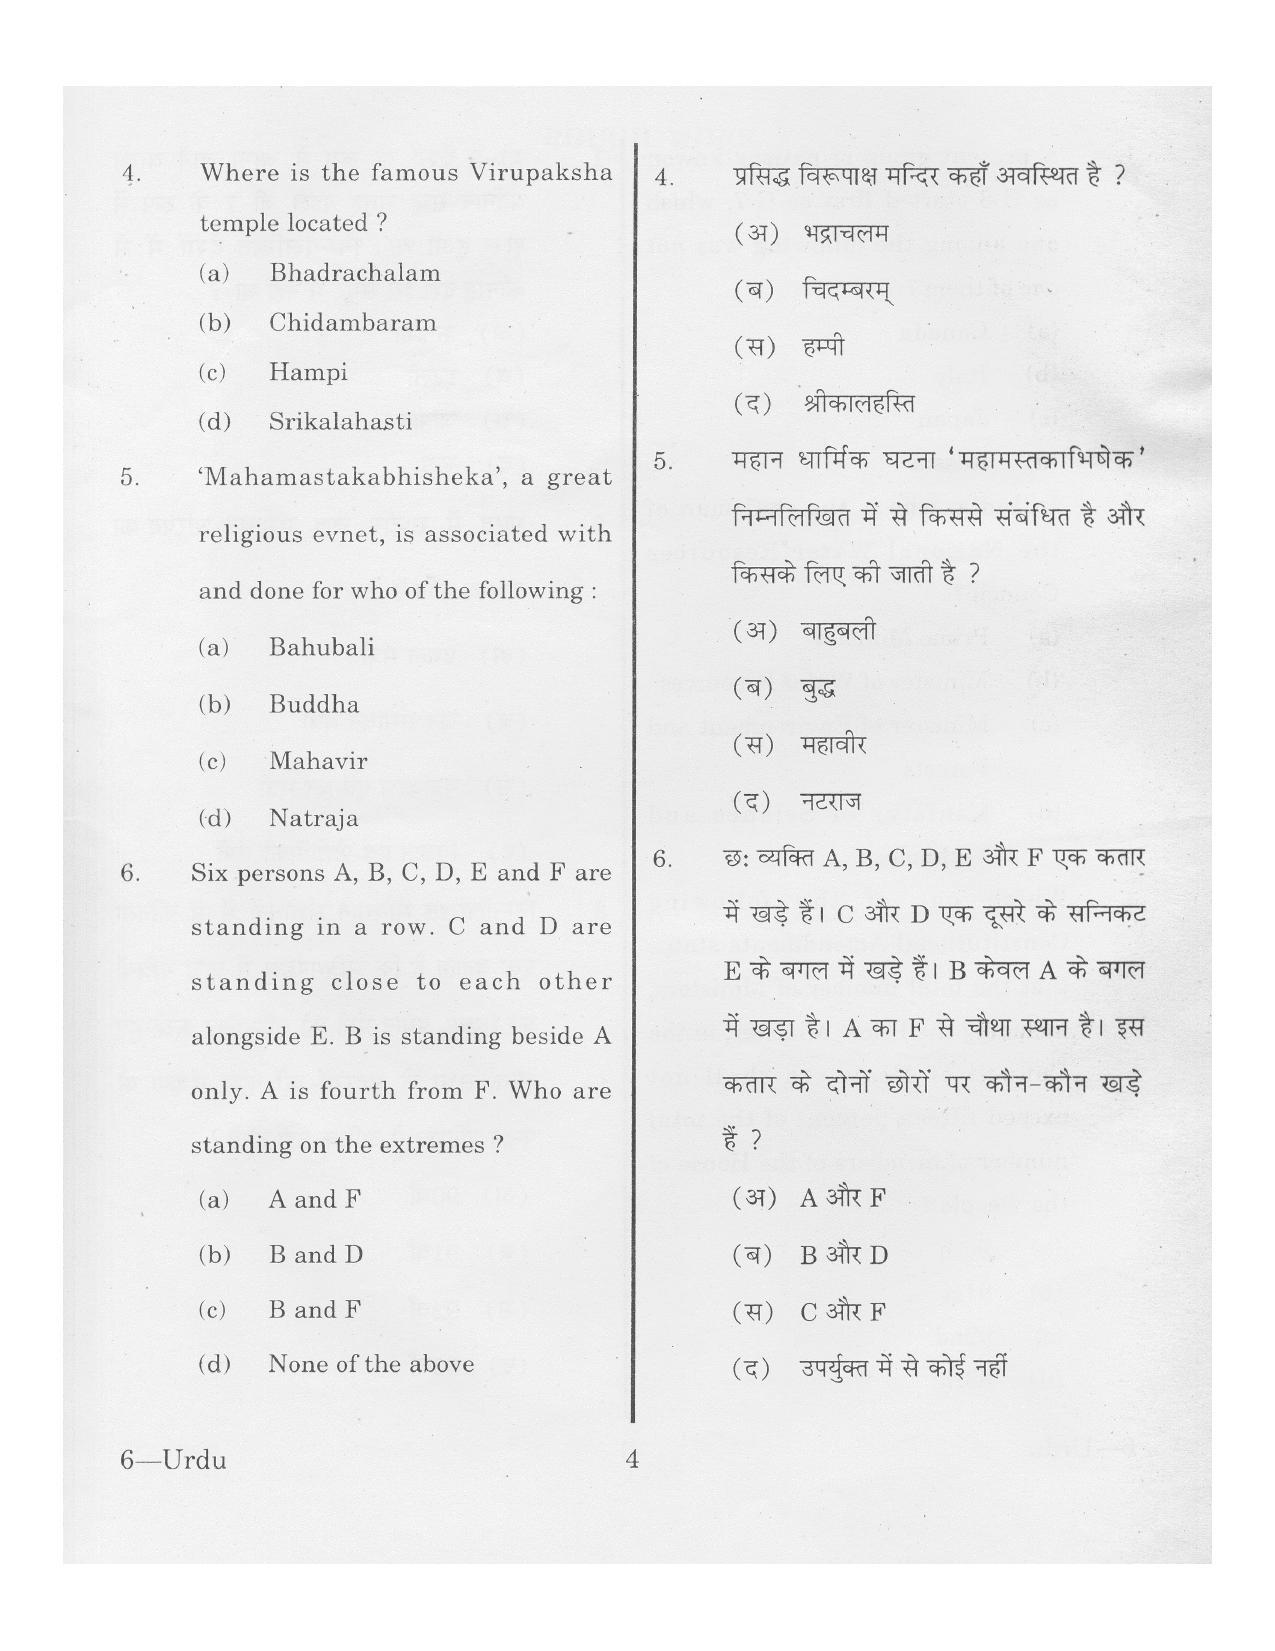 URATPG Urdu 2013 Question Paper - Page 3